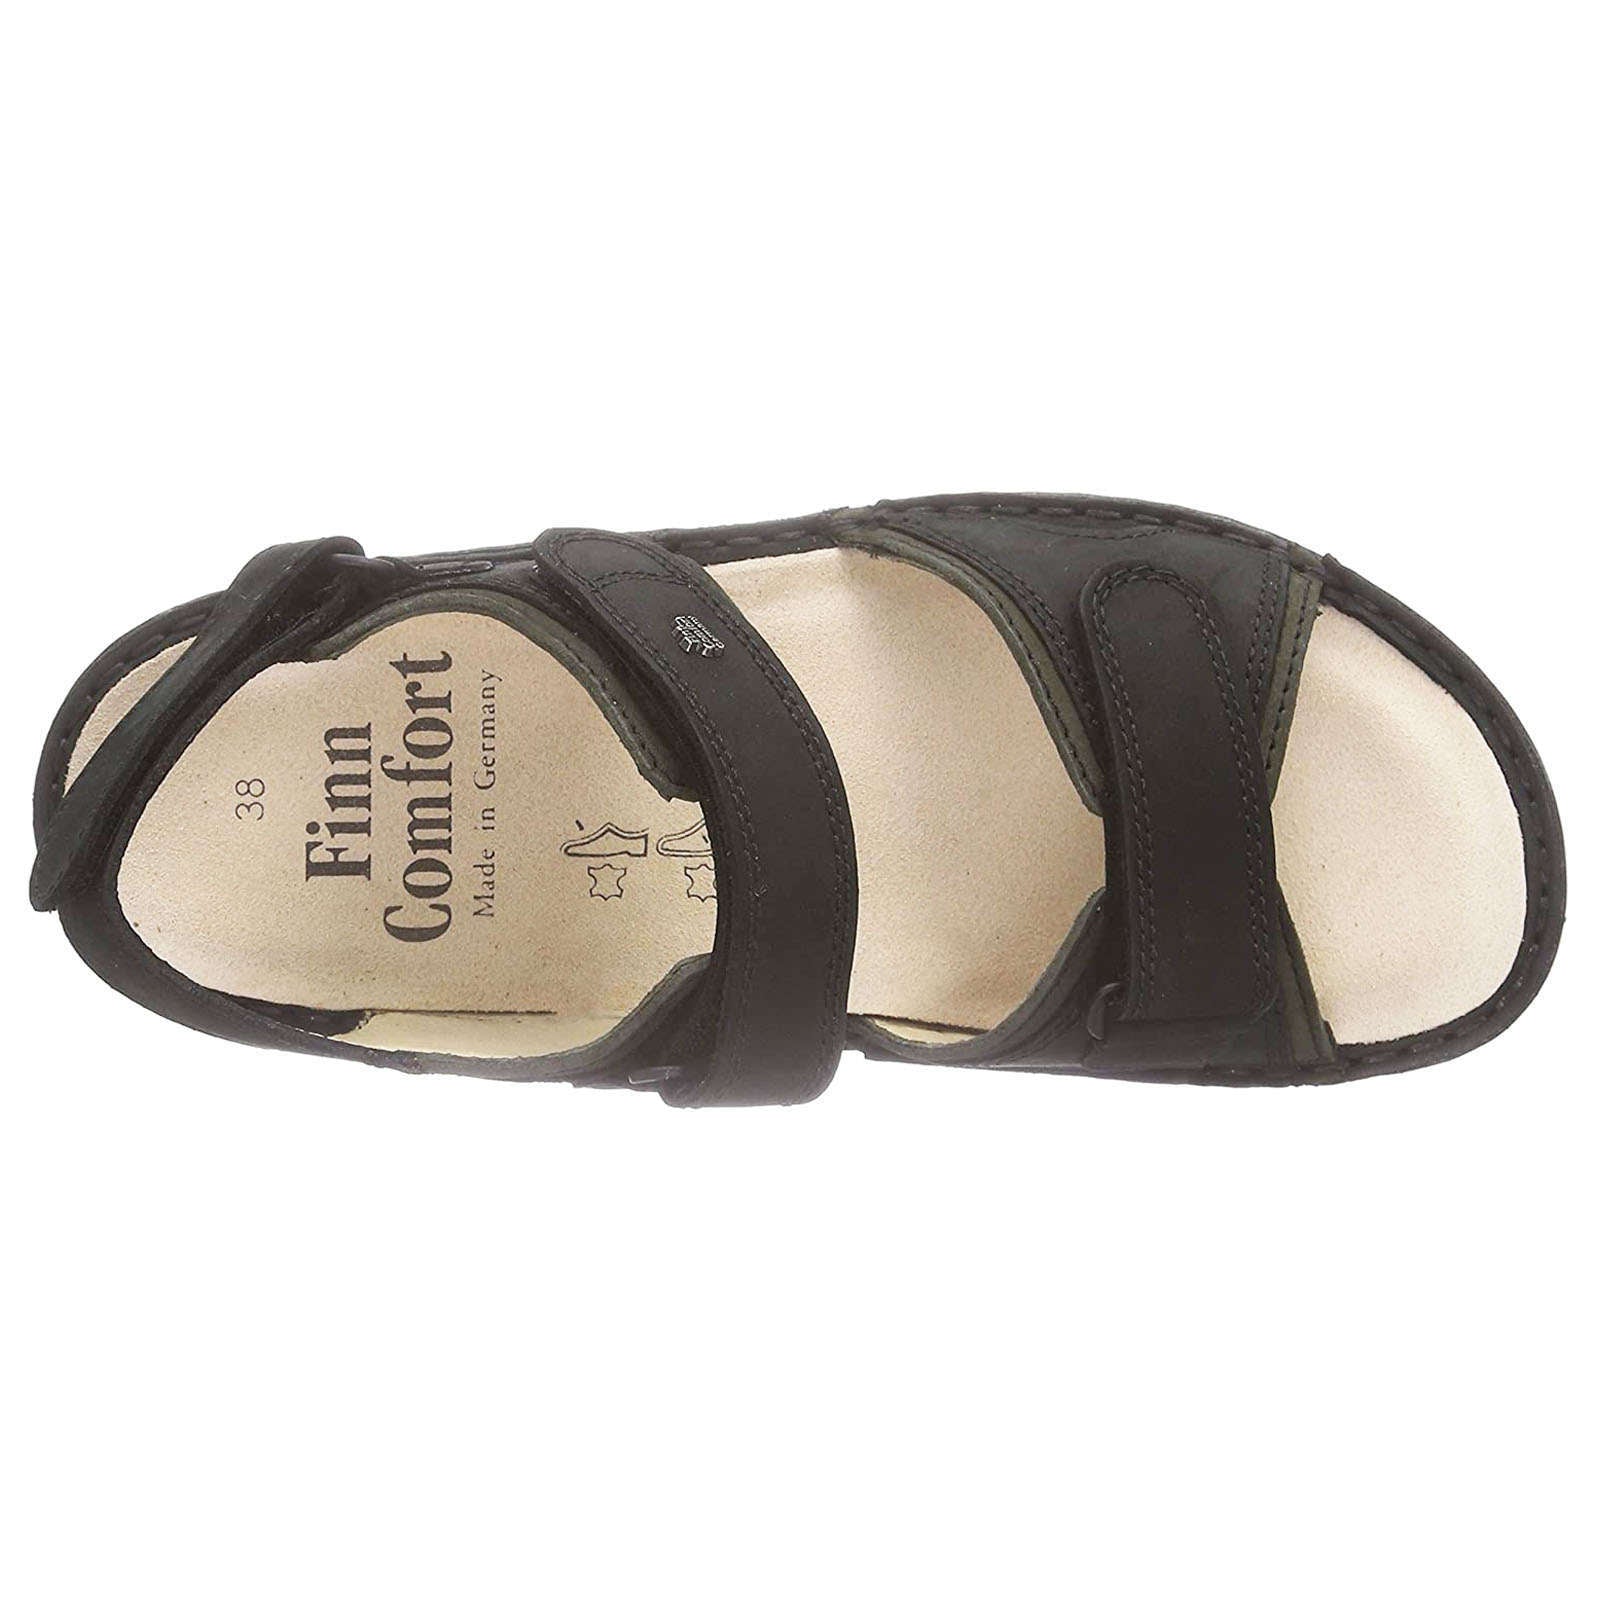 Finn Comfort Yuma Nubuck Leather Men's Casual Sandals#color_black olive